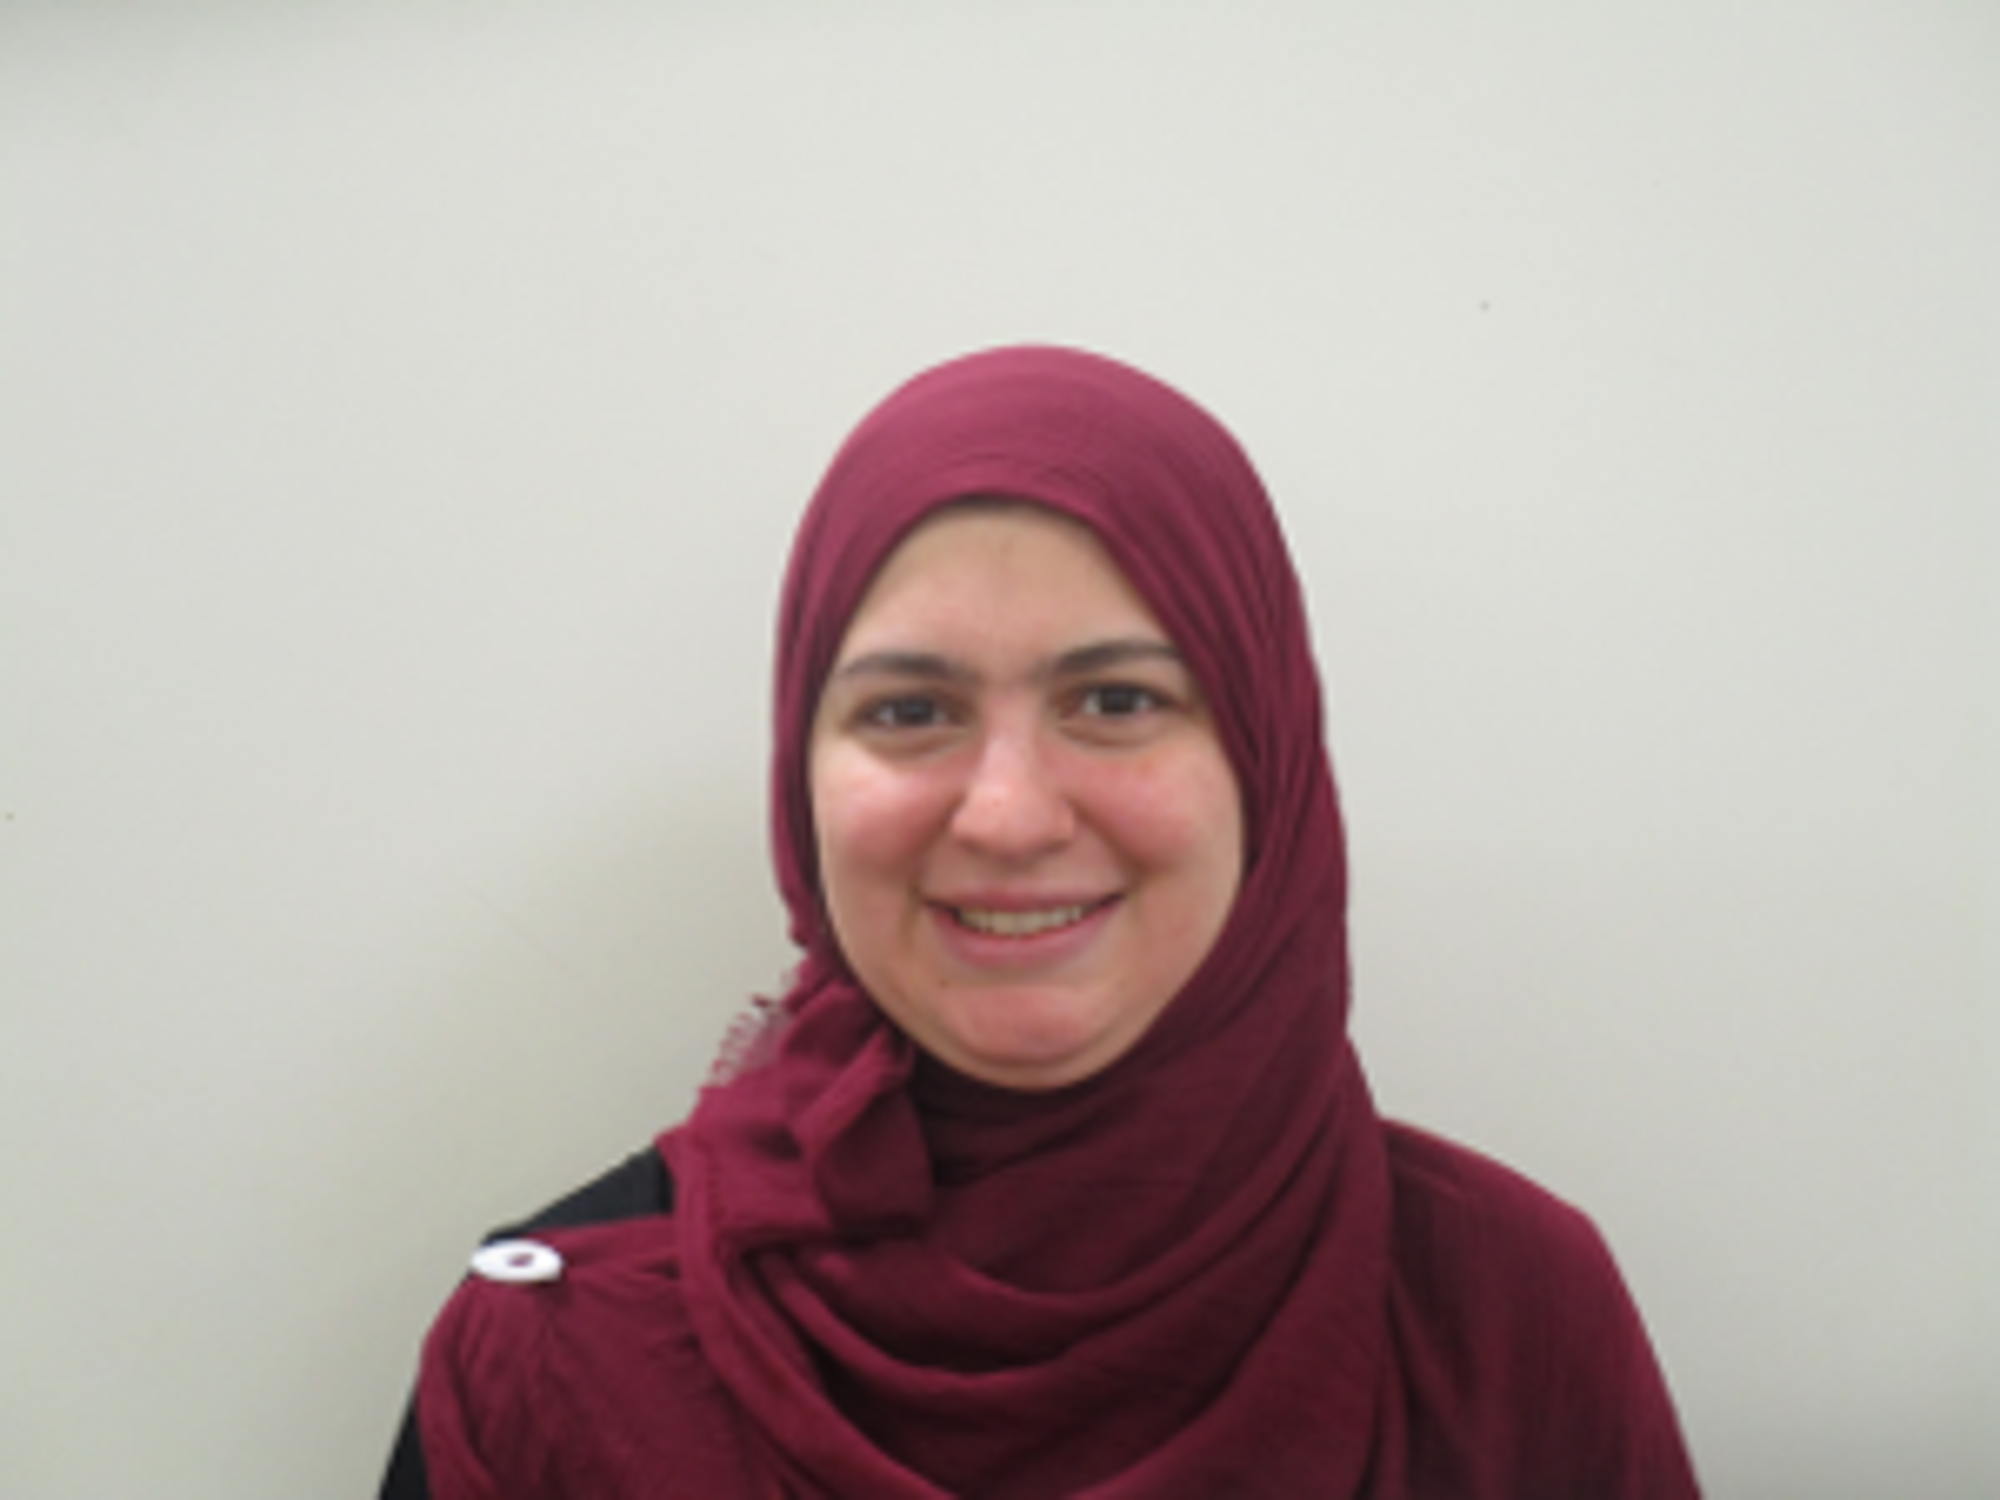 Smiling woman wearing maroon hijab (head scarf)